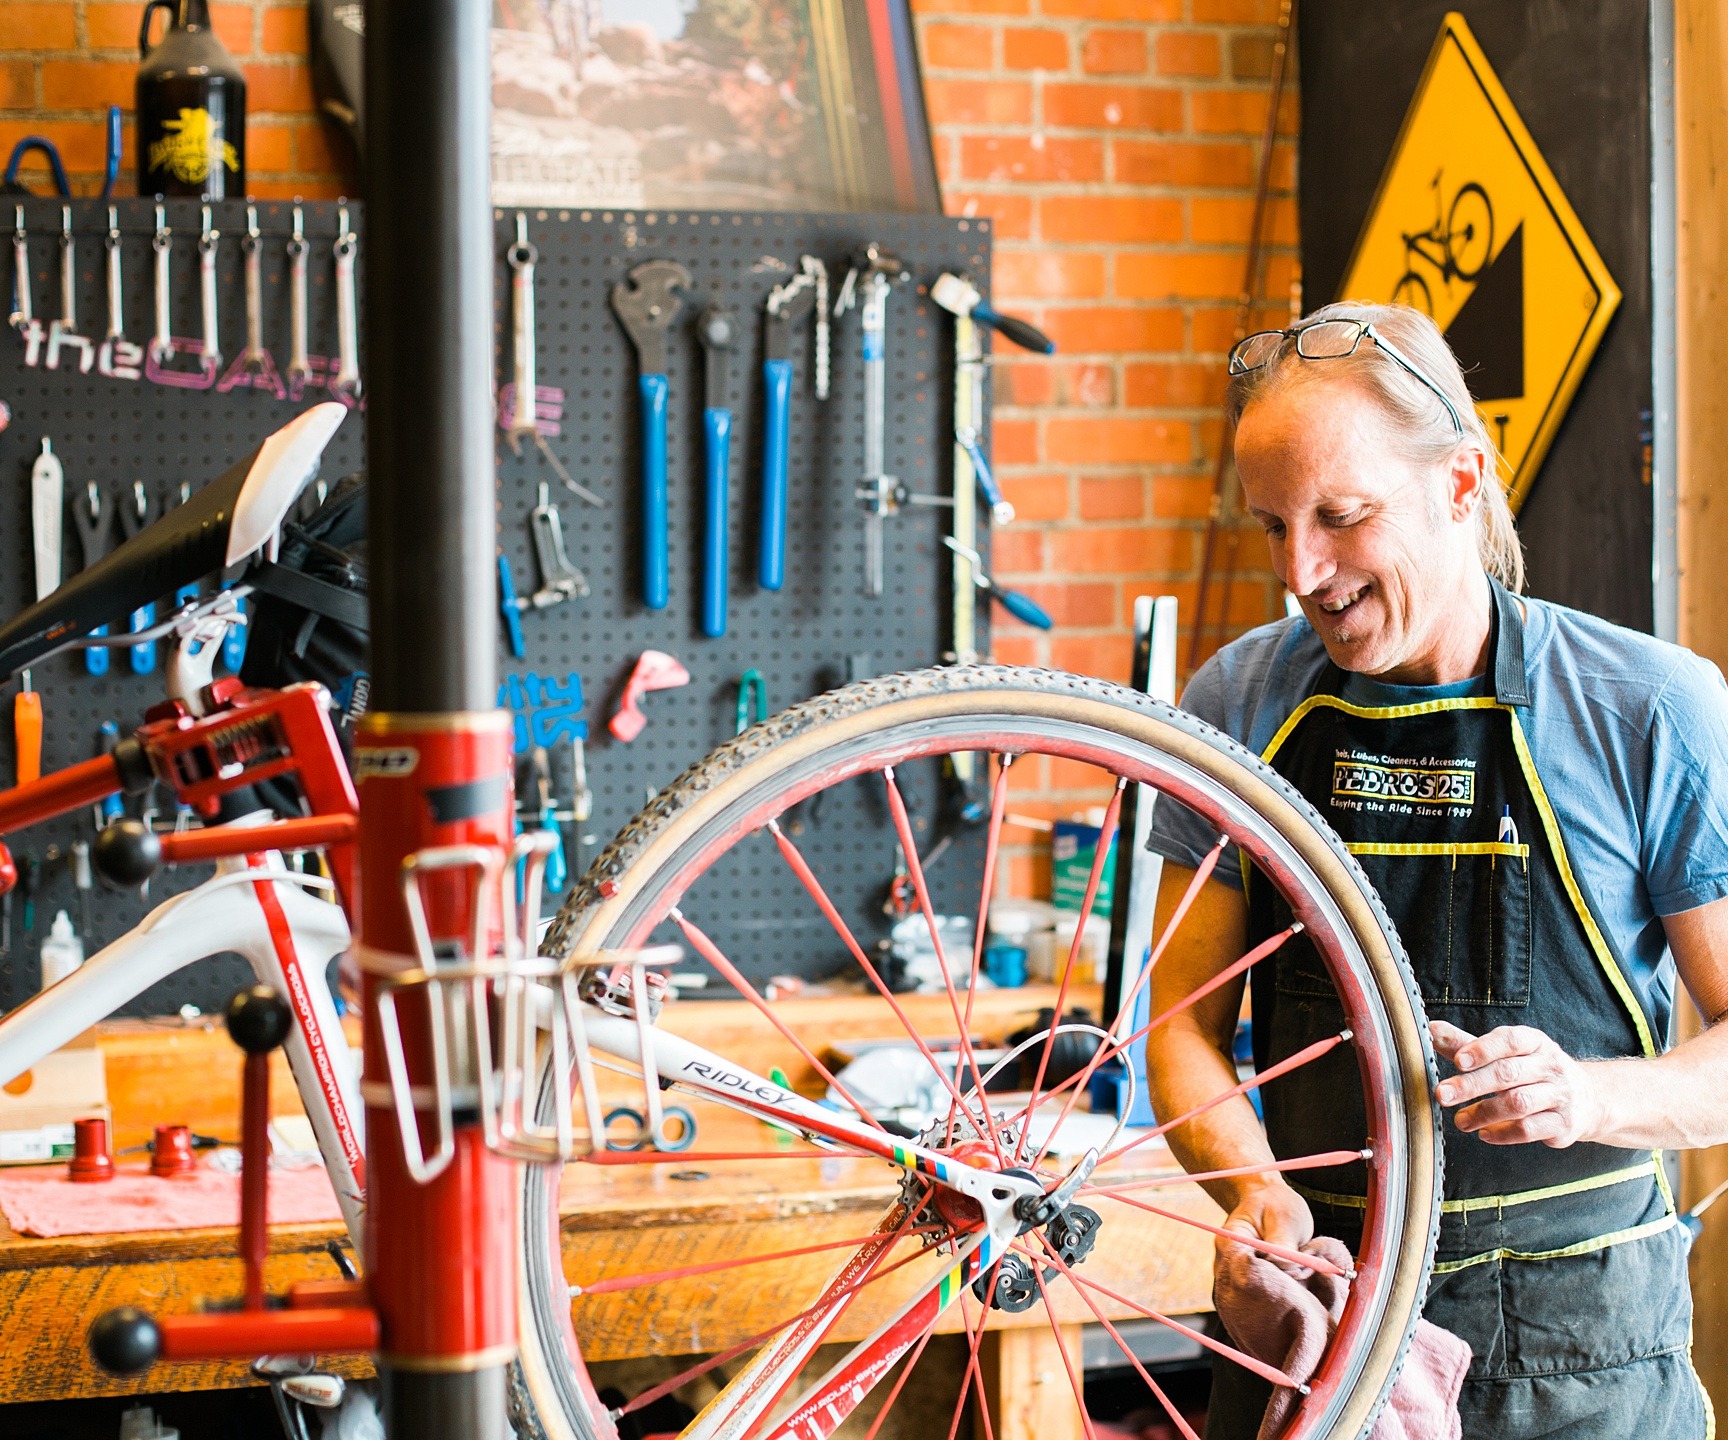 Keenan Cox, Bike Mechanic & Sales at Grand Ridge Cyclery